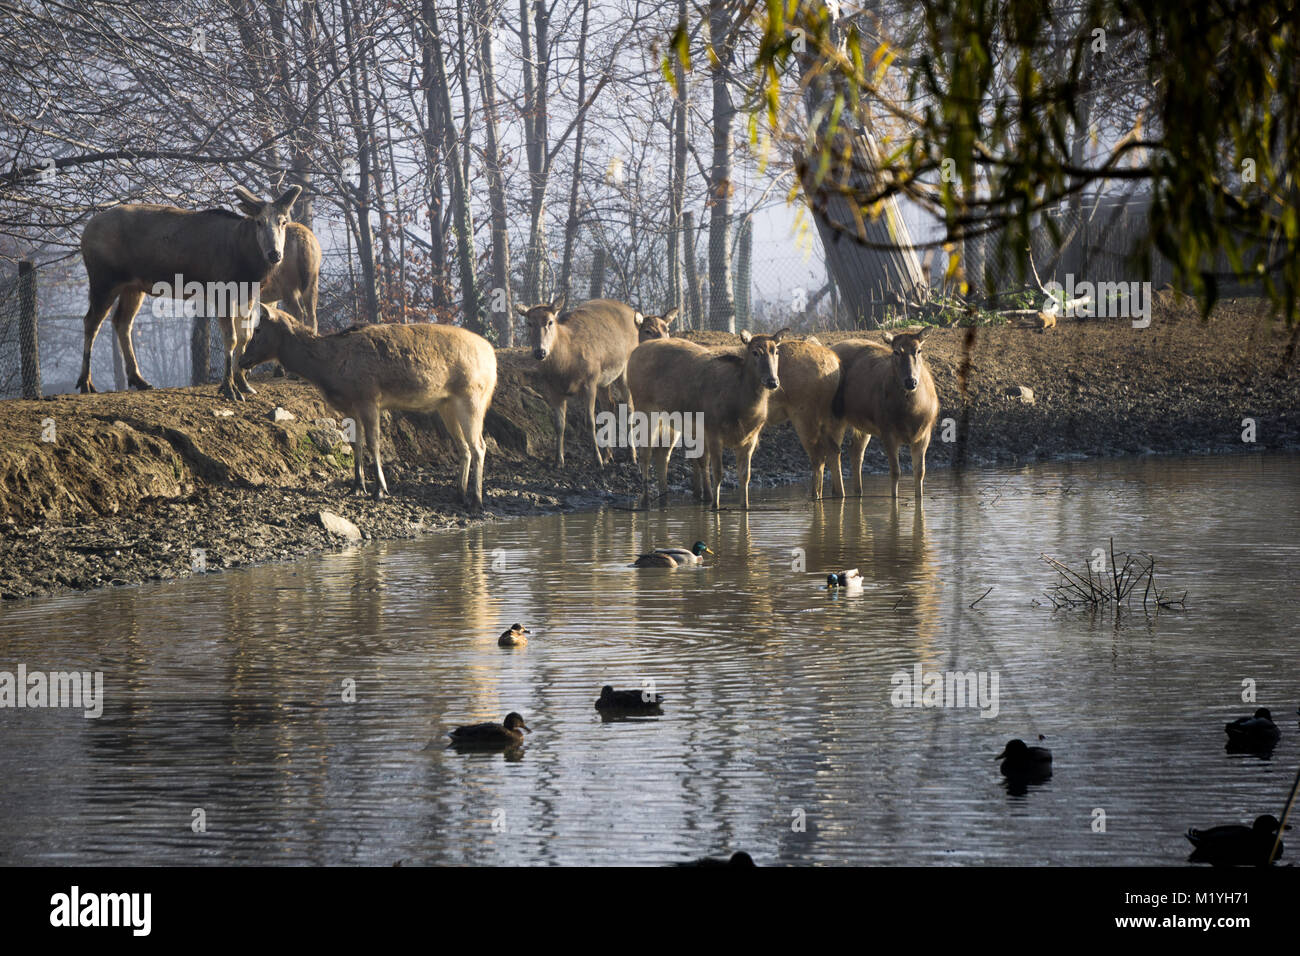 Milu deer gathered around a pond with ducks Stock Photo